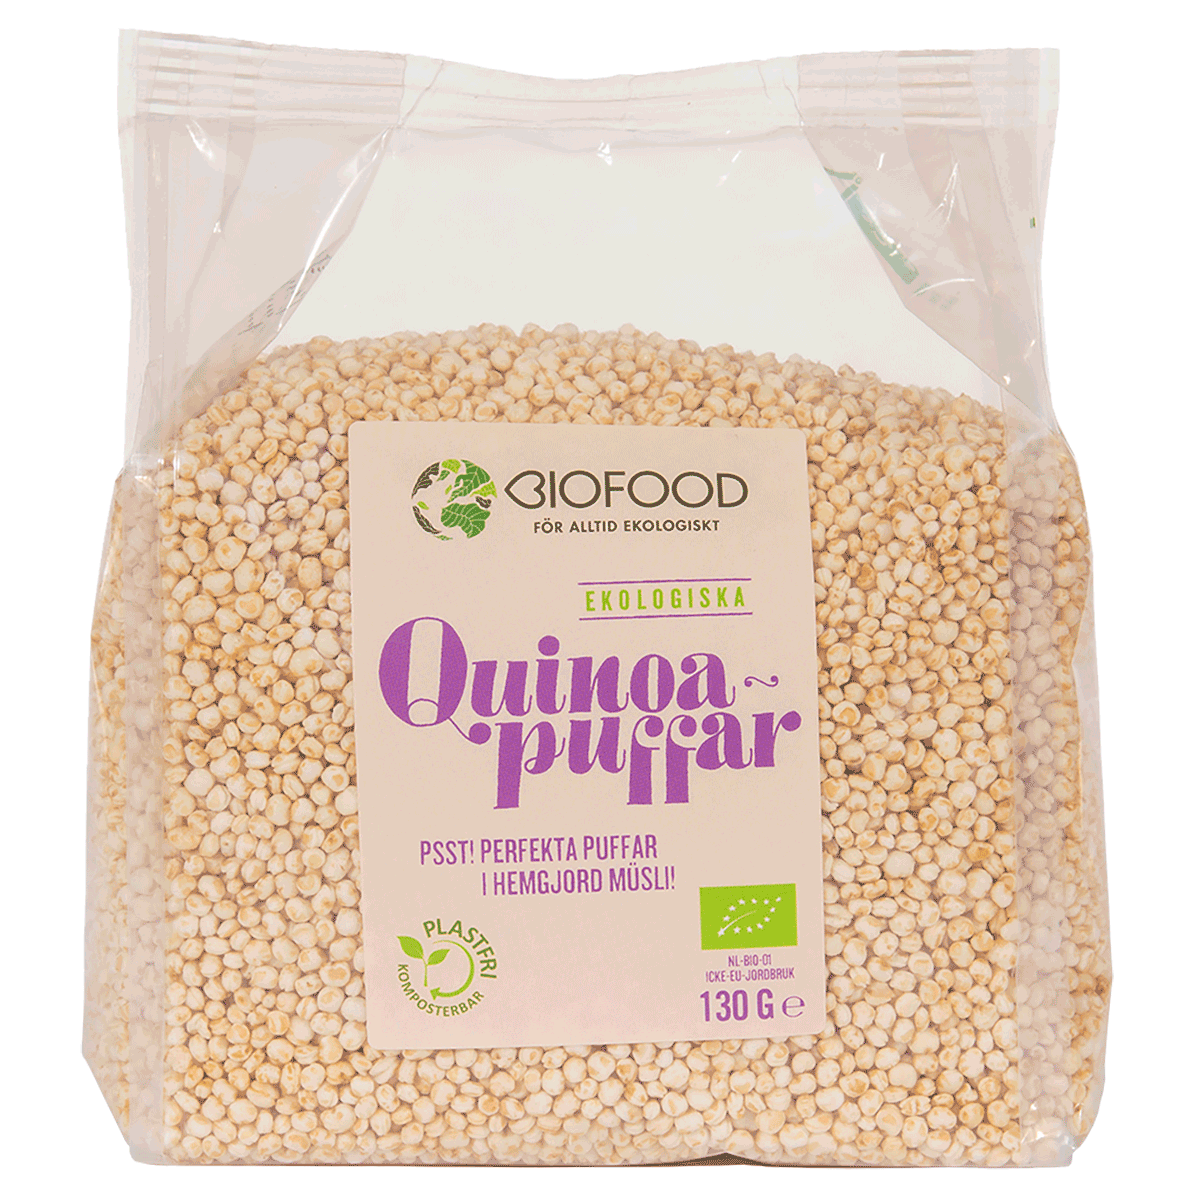 Biofood's Quinoa Puffs'